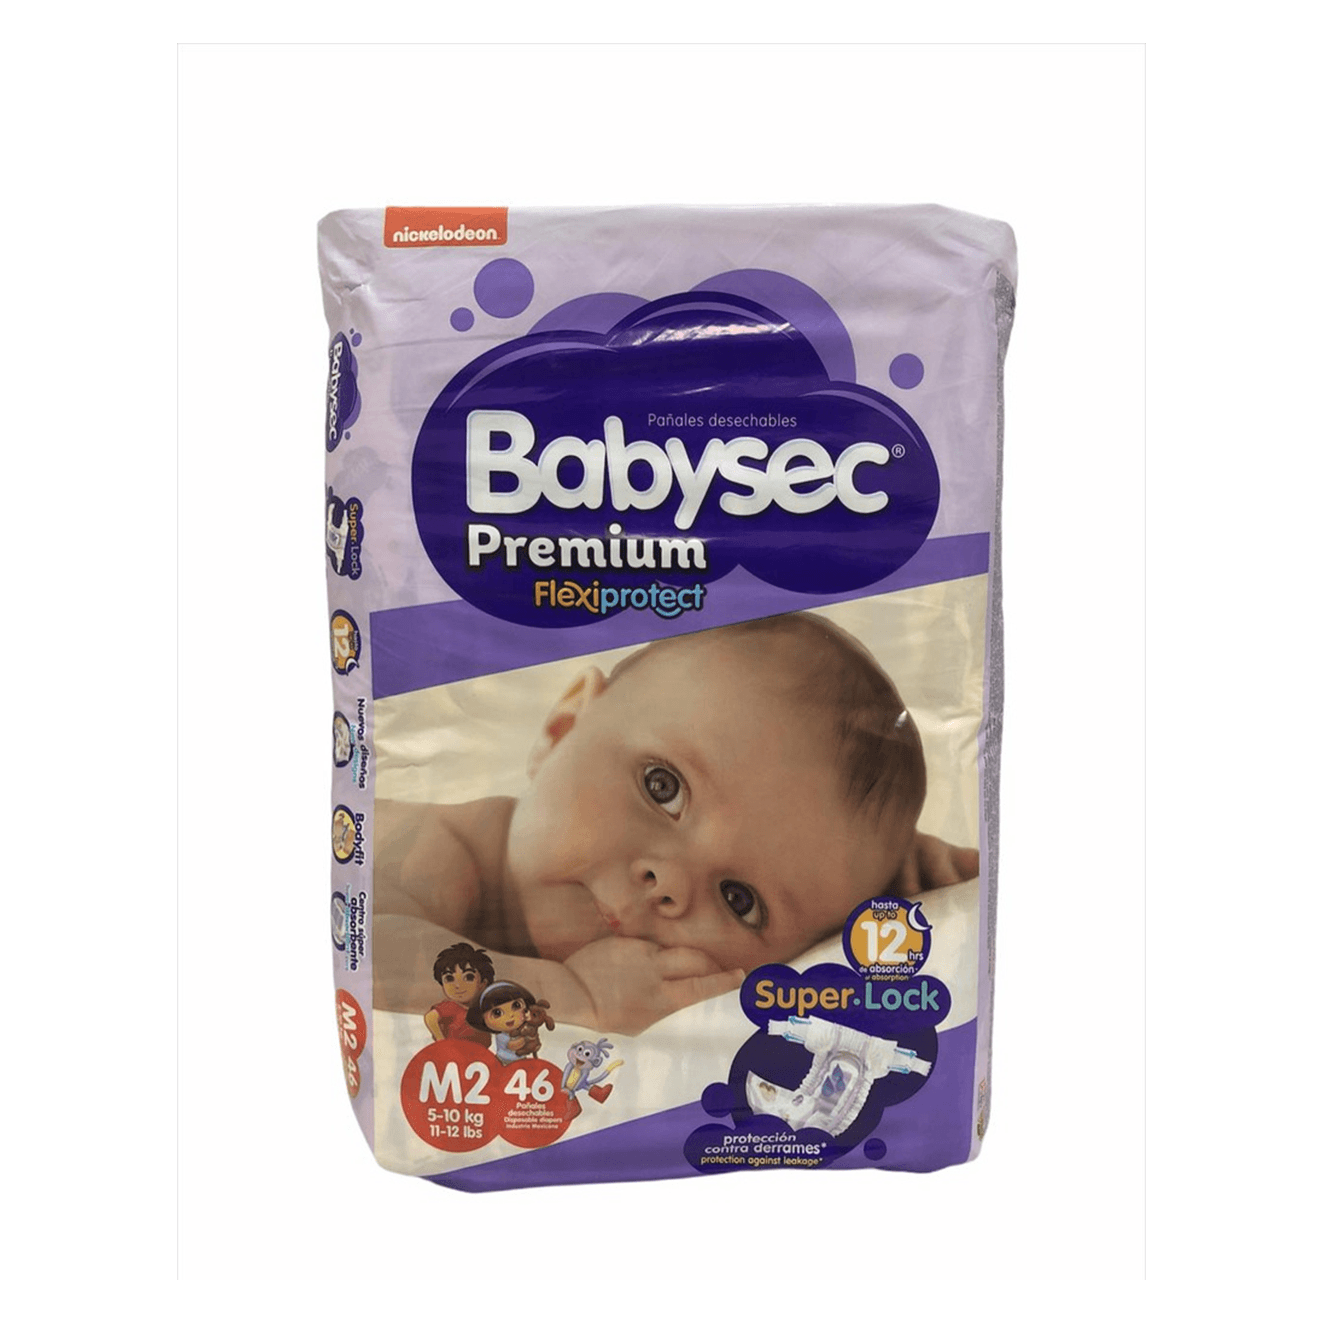 Contenedor de pañales marca Premium  - Premium Baby Company